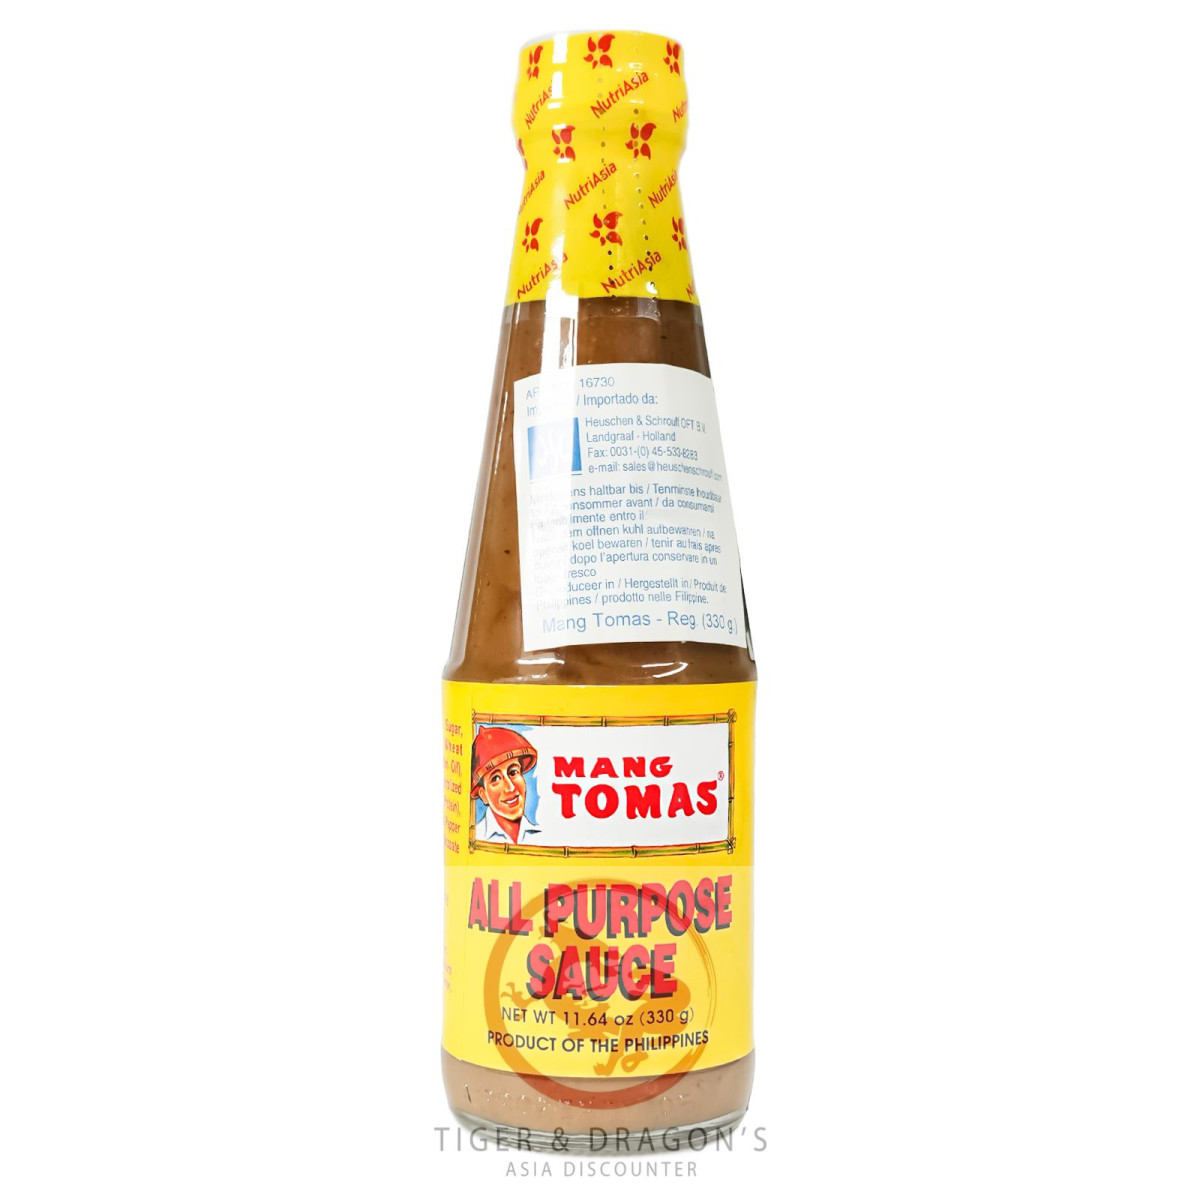 Mang Tomas All Purpose Sauce mild 330g